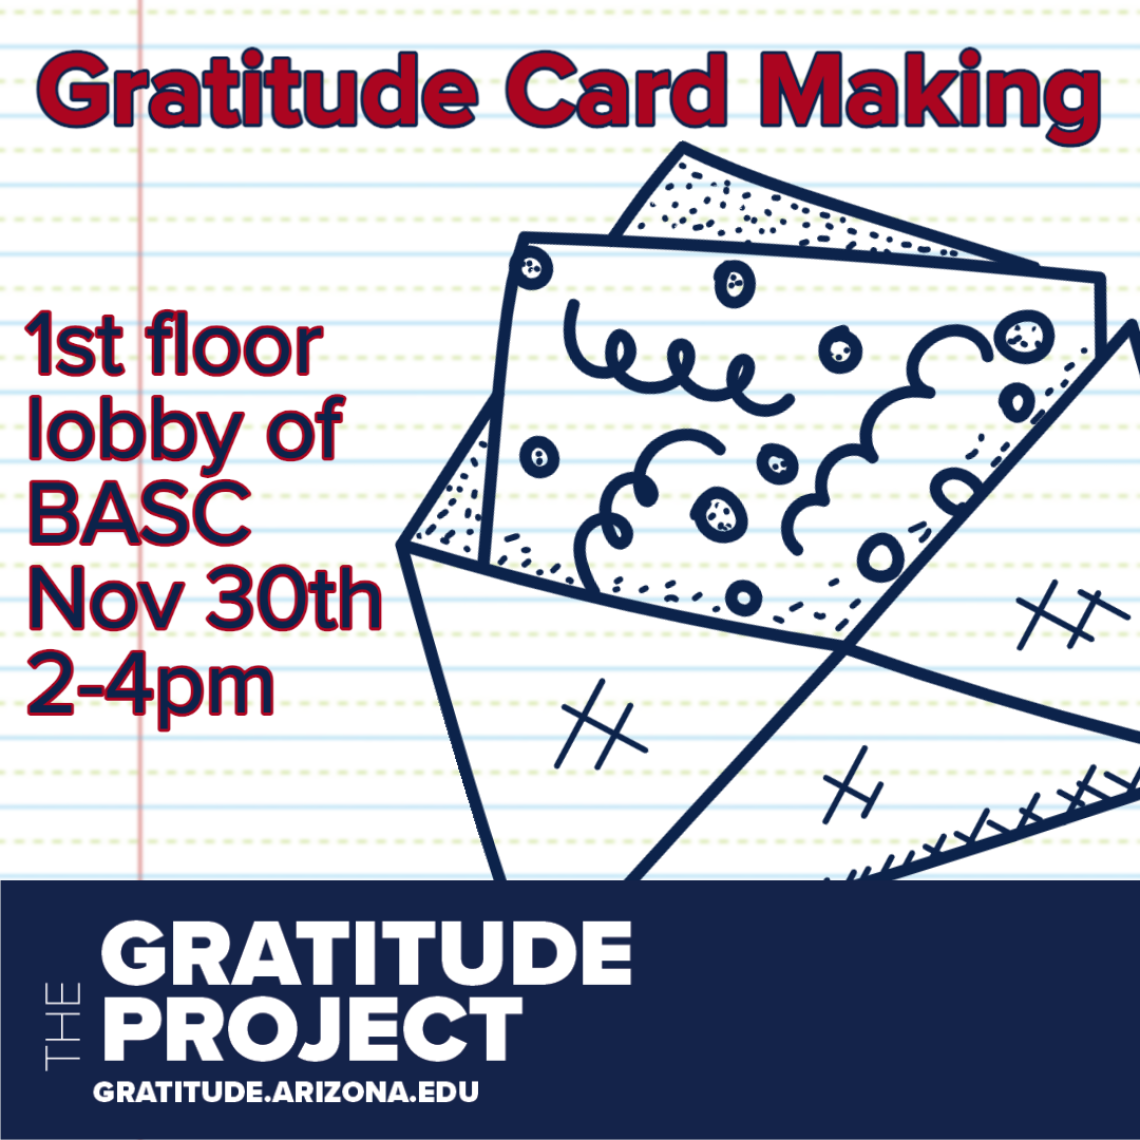 gratitude card making flyer